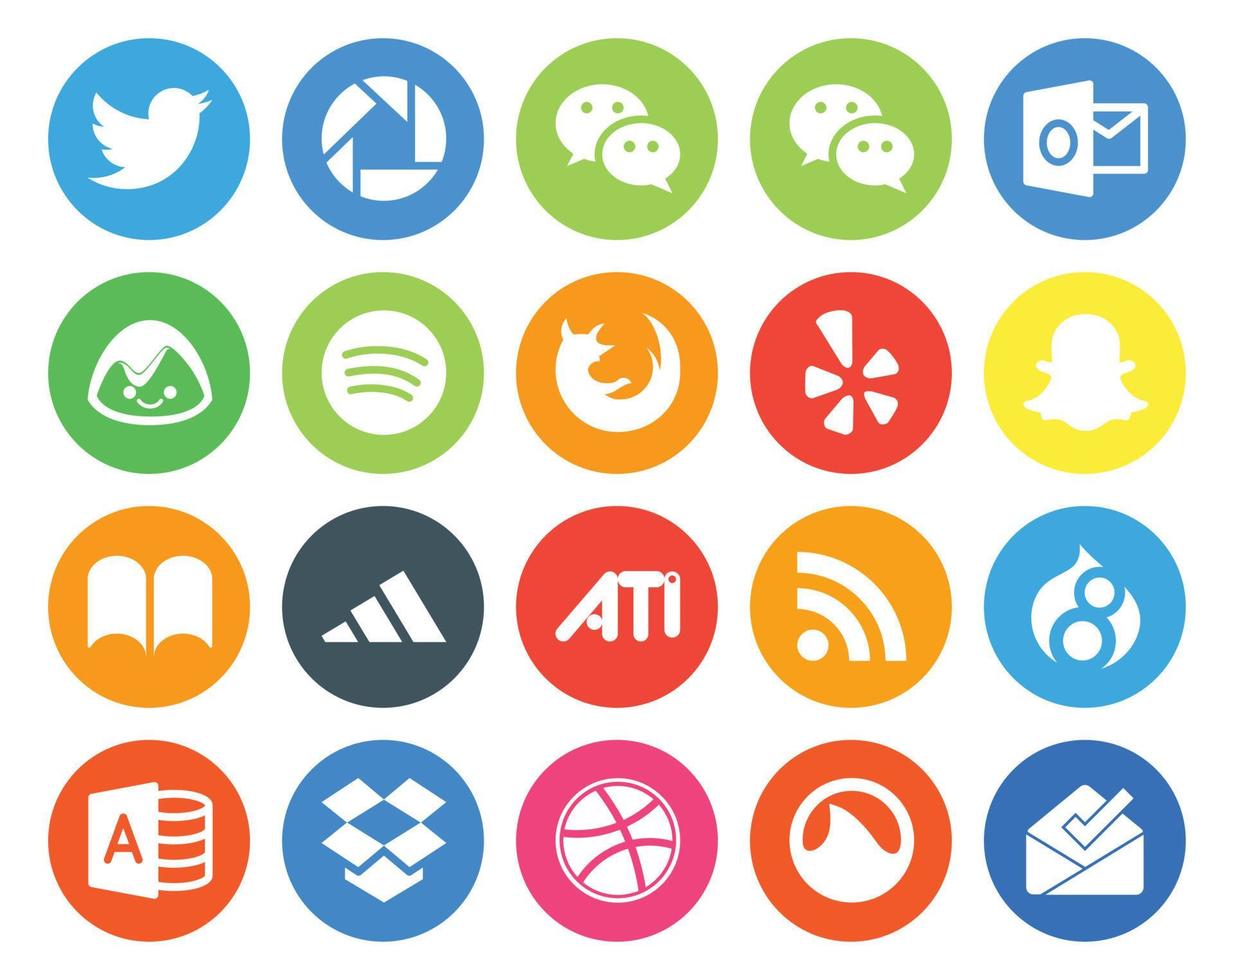 Paquete de 20 íconos de redes sociales que incluye microsoft access rss firefox ati ibooks vector